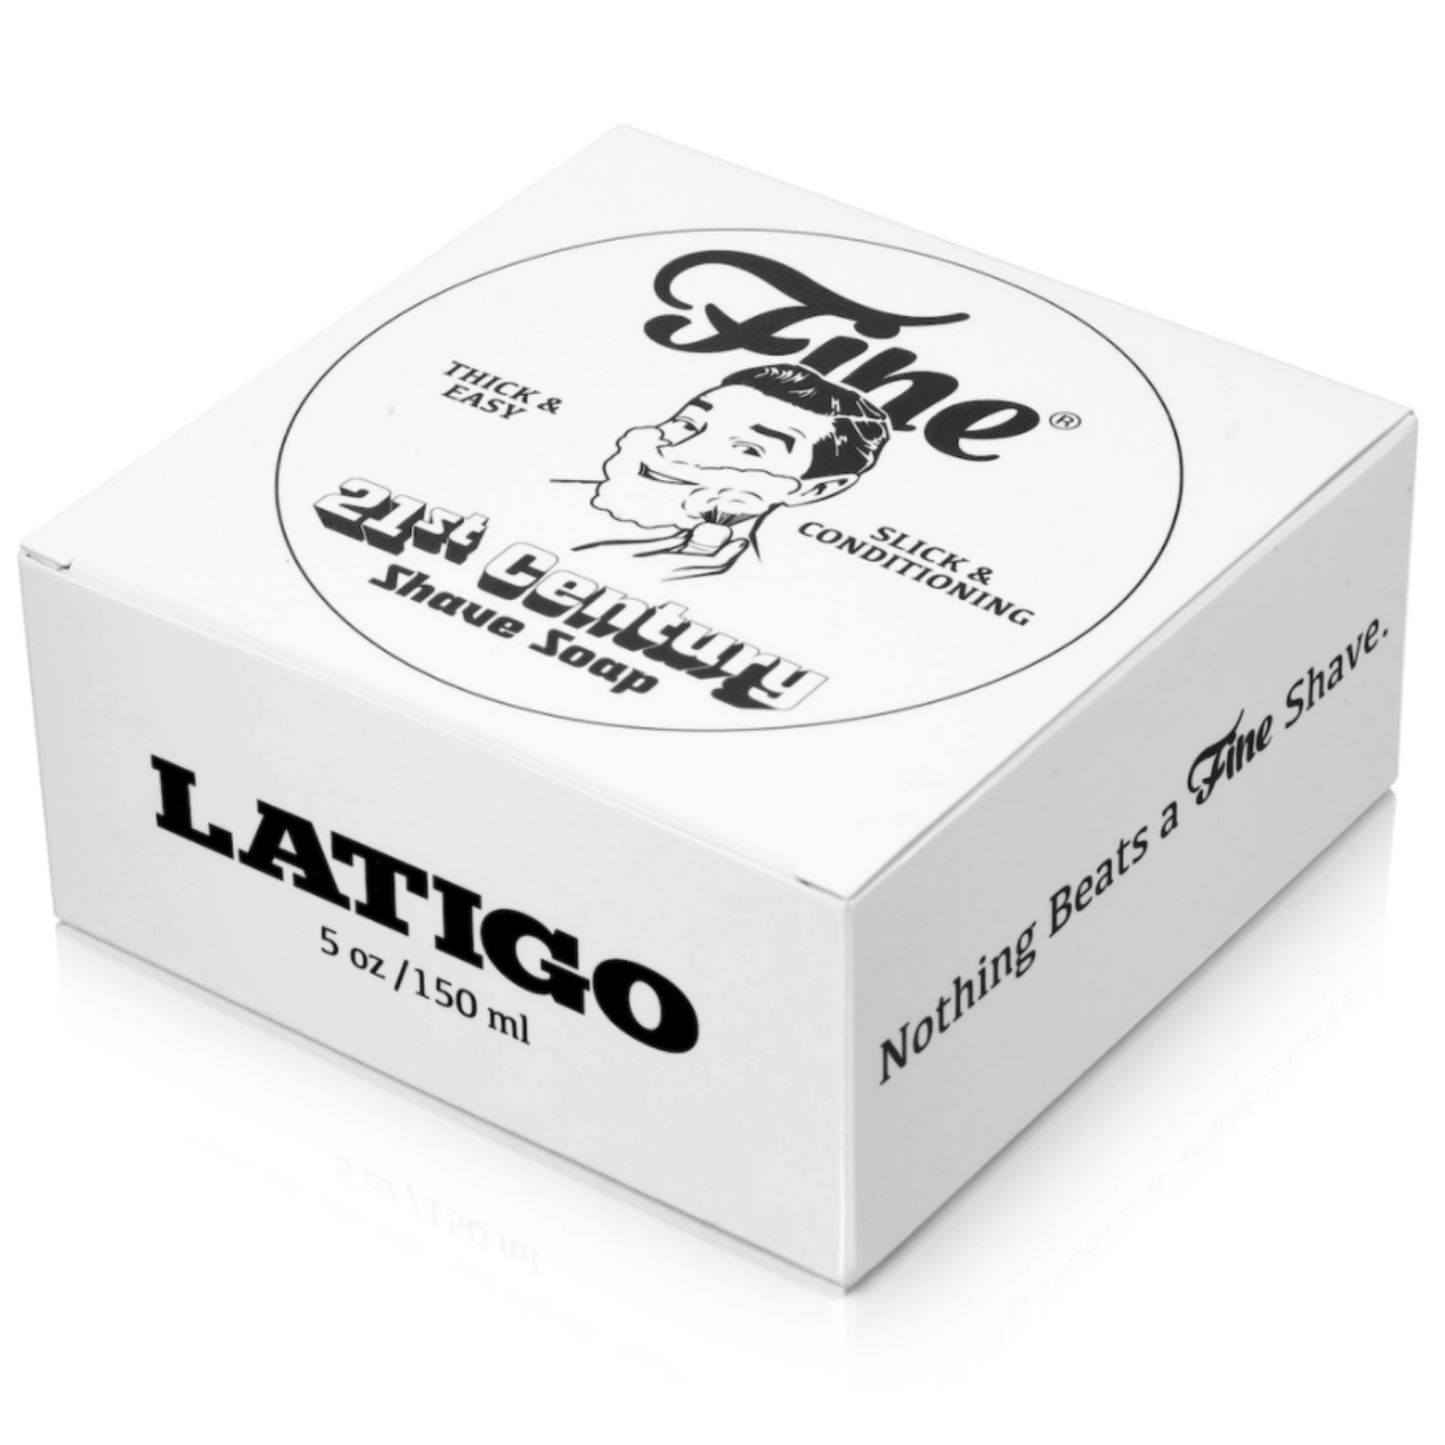 Fine Accoutrements Latigo Shaving Soap (5 oz) #10083300